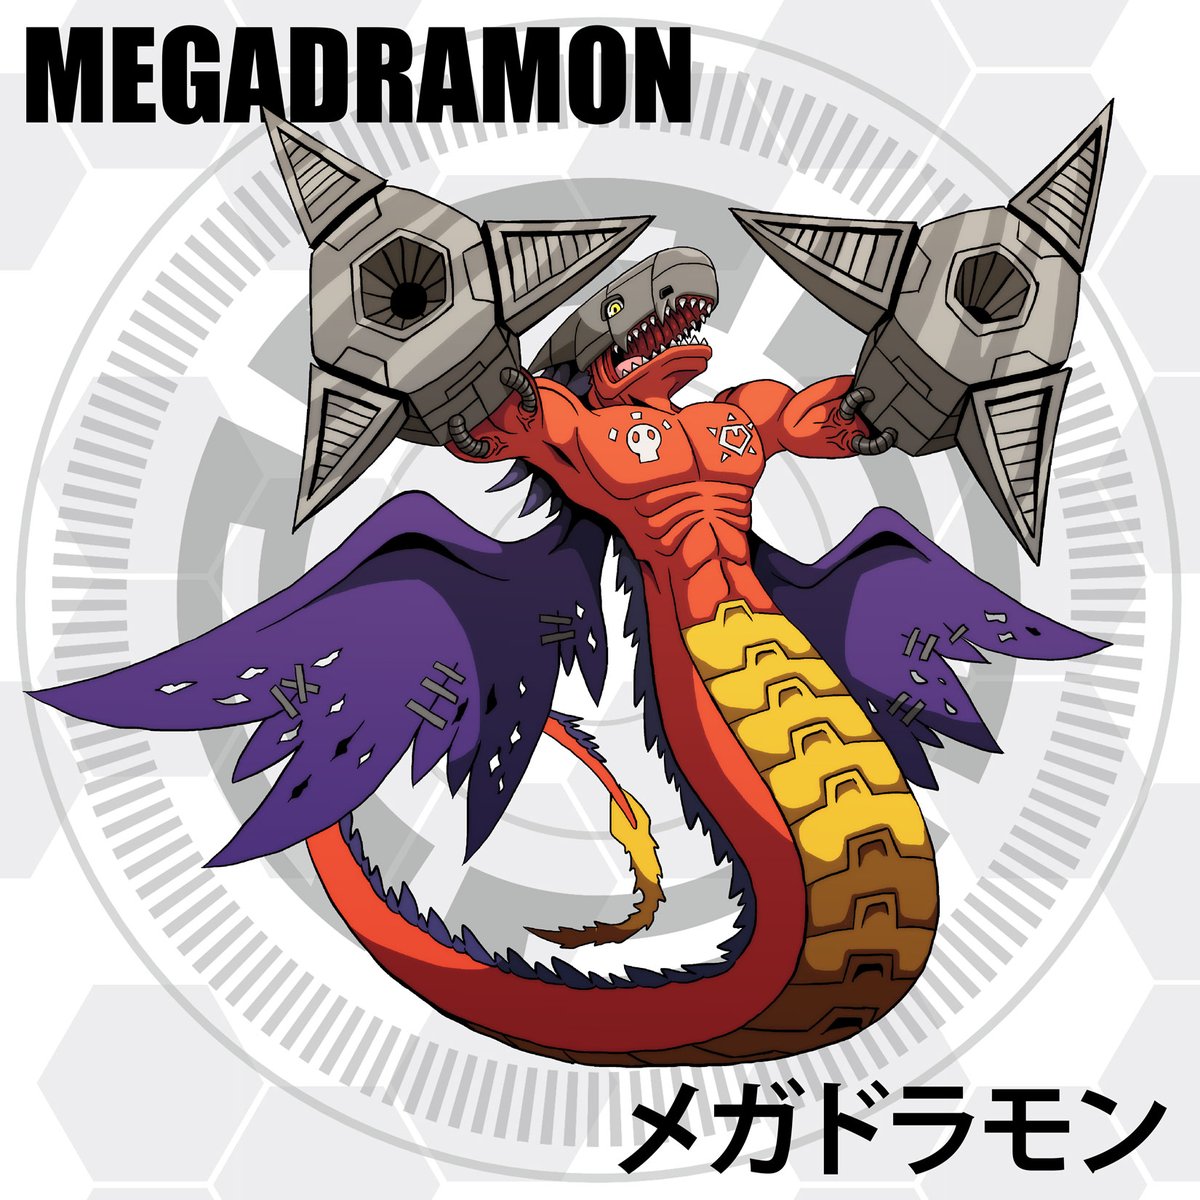 Reuploads: MetalGreymon(Vir), Andromon, SkullGreymon, Megadramon

I'm mostly out of my rut now so I should have some new art done soon.

#Digimon #デジモン